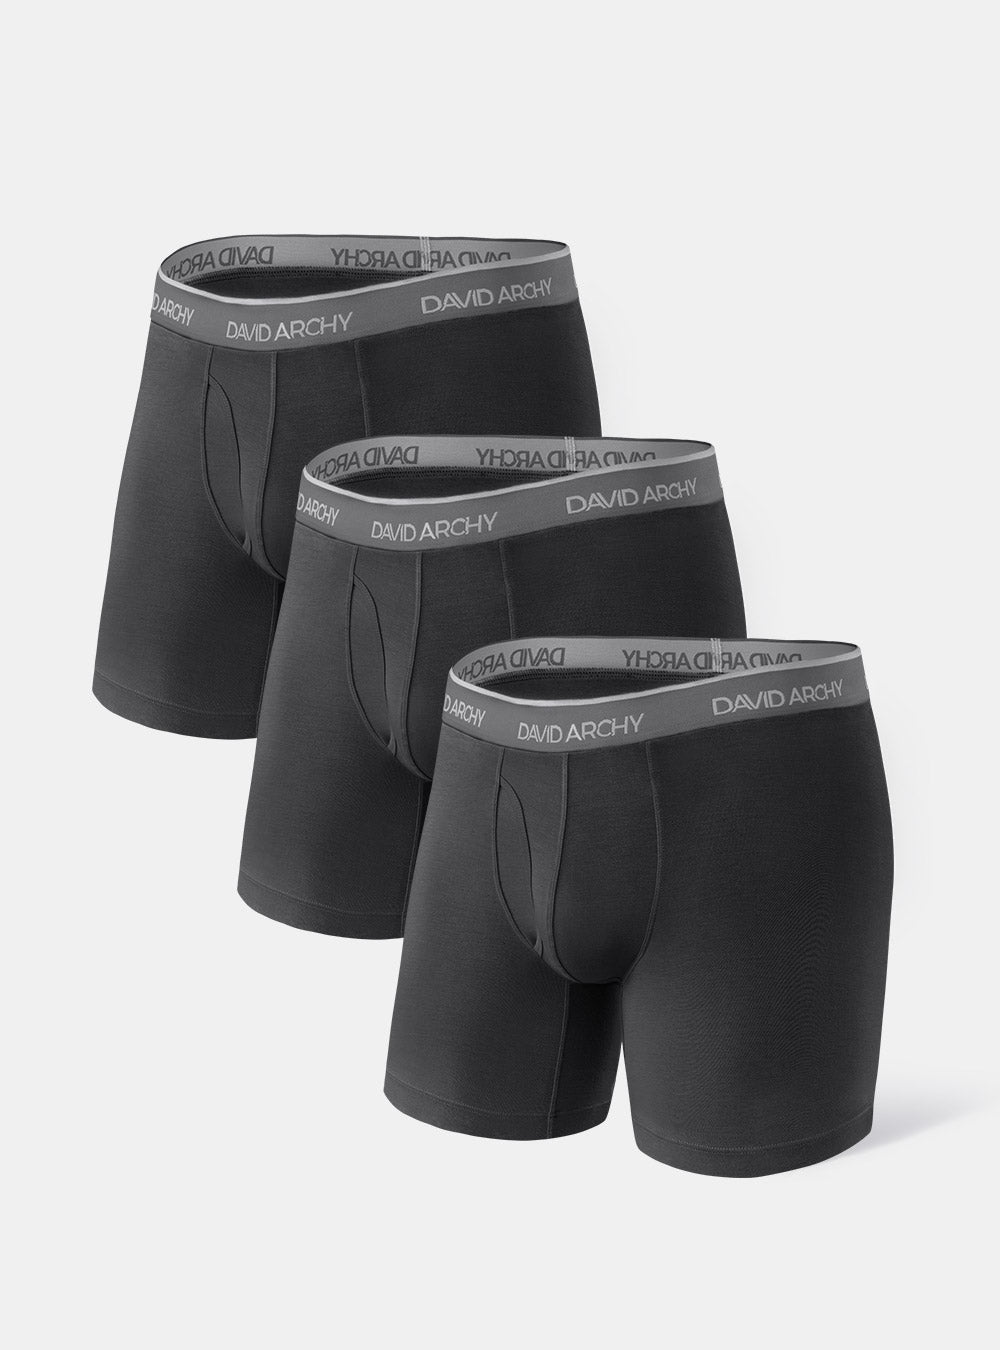 DAVID ARCHY Men's Underwear Bamboo Briefs Super Soft Comfort Lightweight  Pouch B